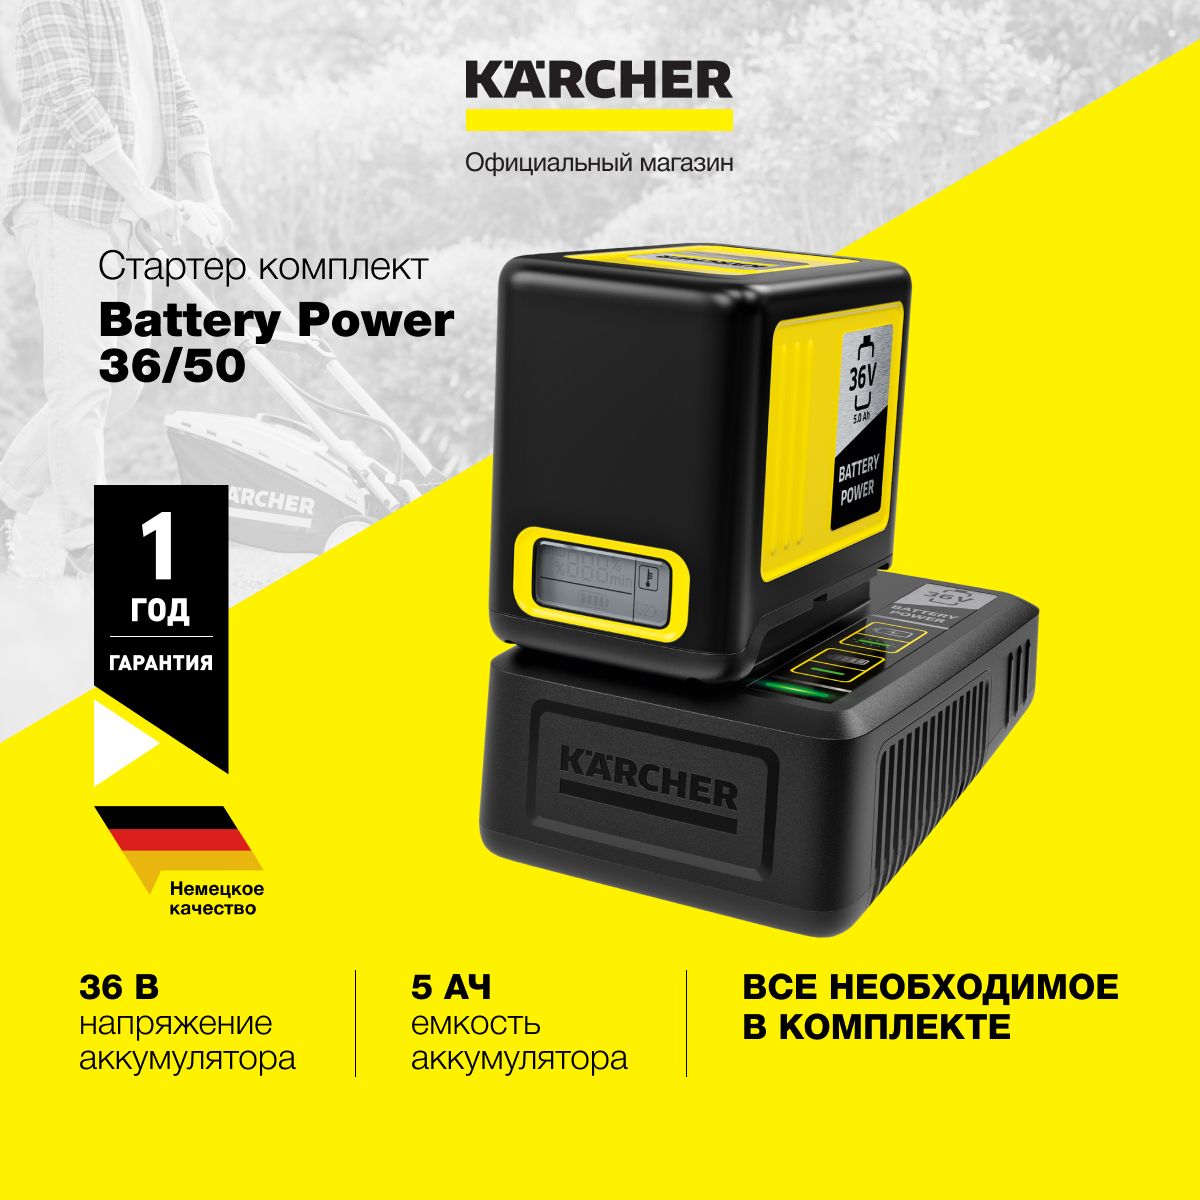 Karcher battery power. Karcher Battery Battery Power 36/50 аккумулятор. Kärcher Battery Battery Power 18/50 аккумулятор. Karcher Battery Power 18/50 (2.445-035.0) li-ion 18 в 5 а·ч. Kärcher Battery Battery Power 36/25 аккумулятор.